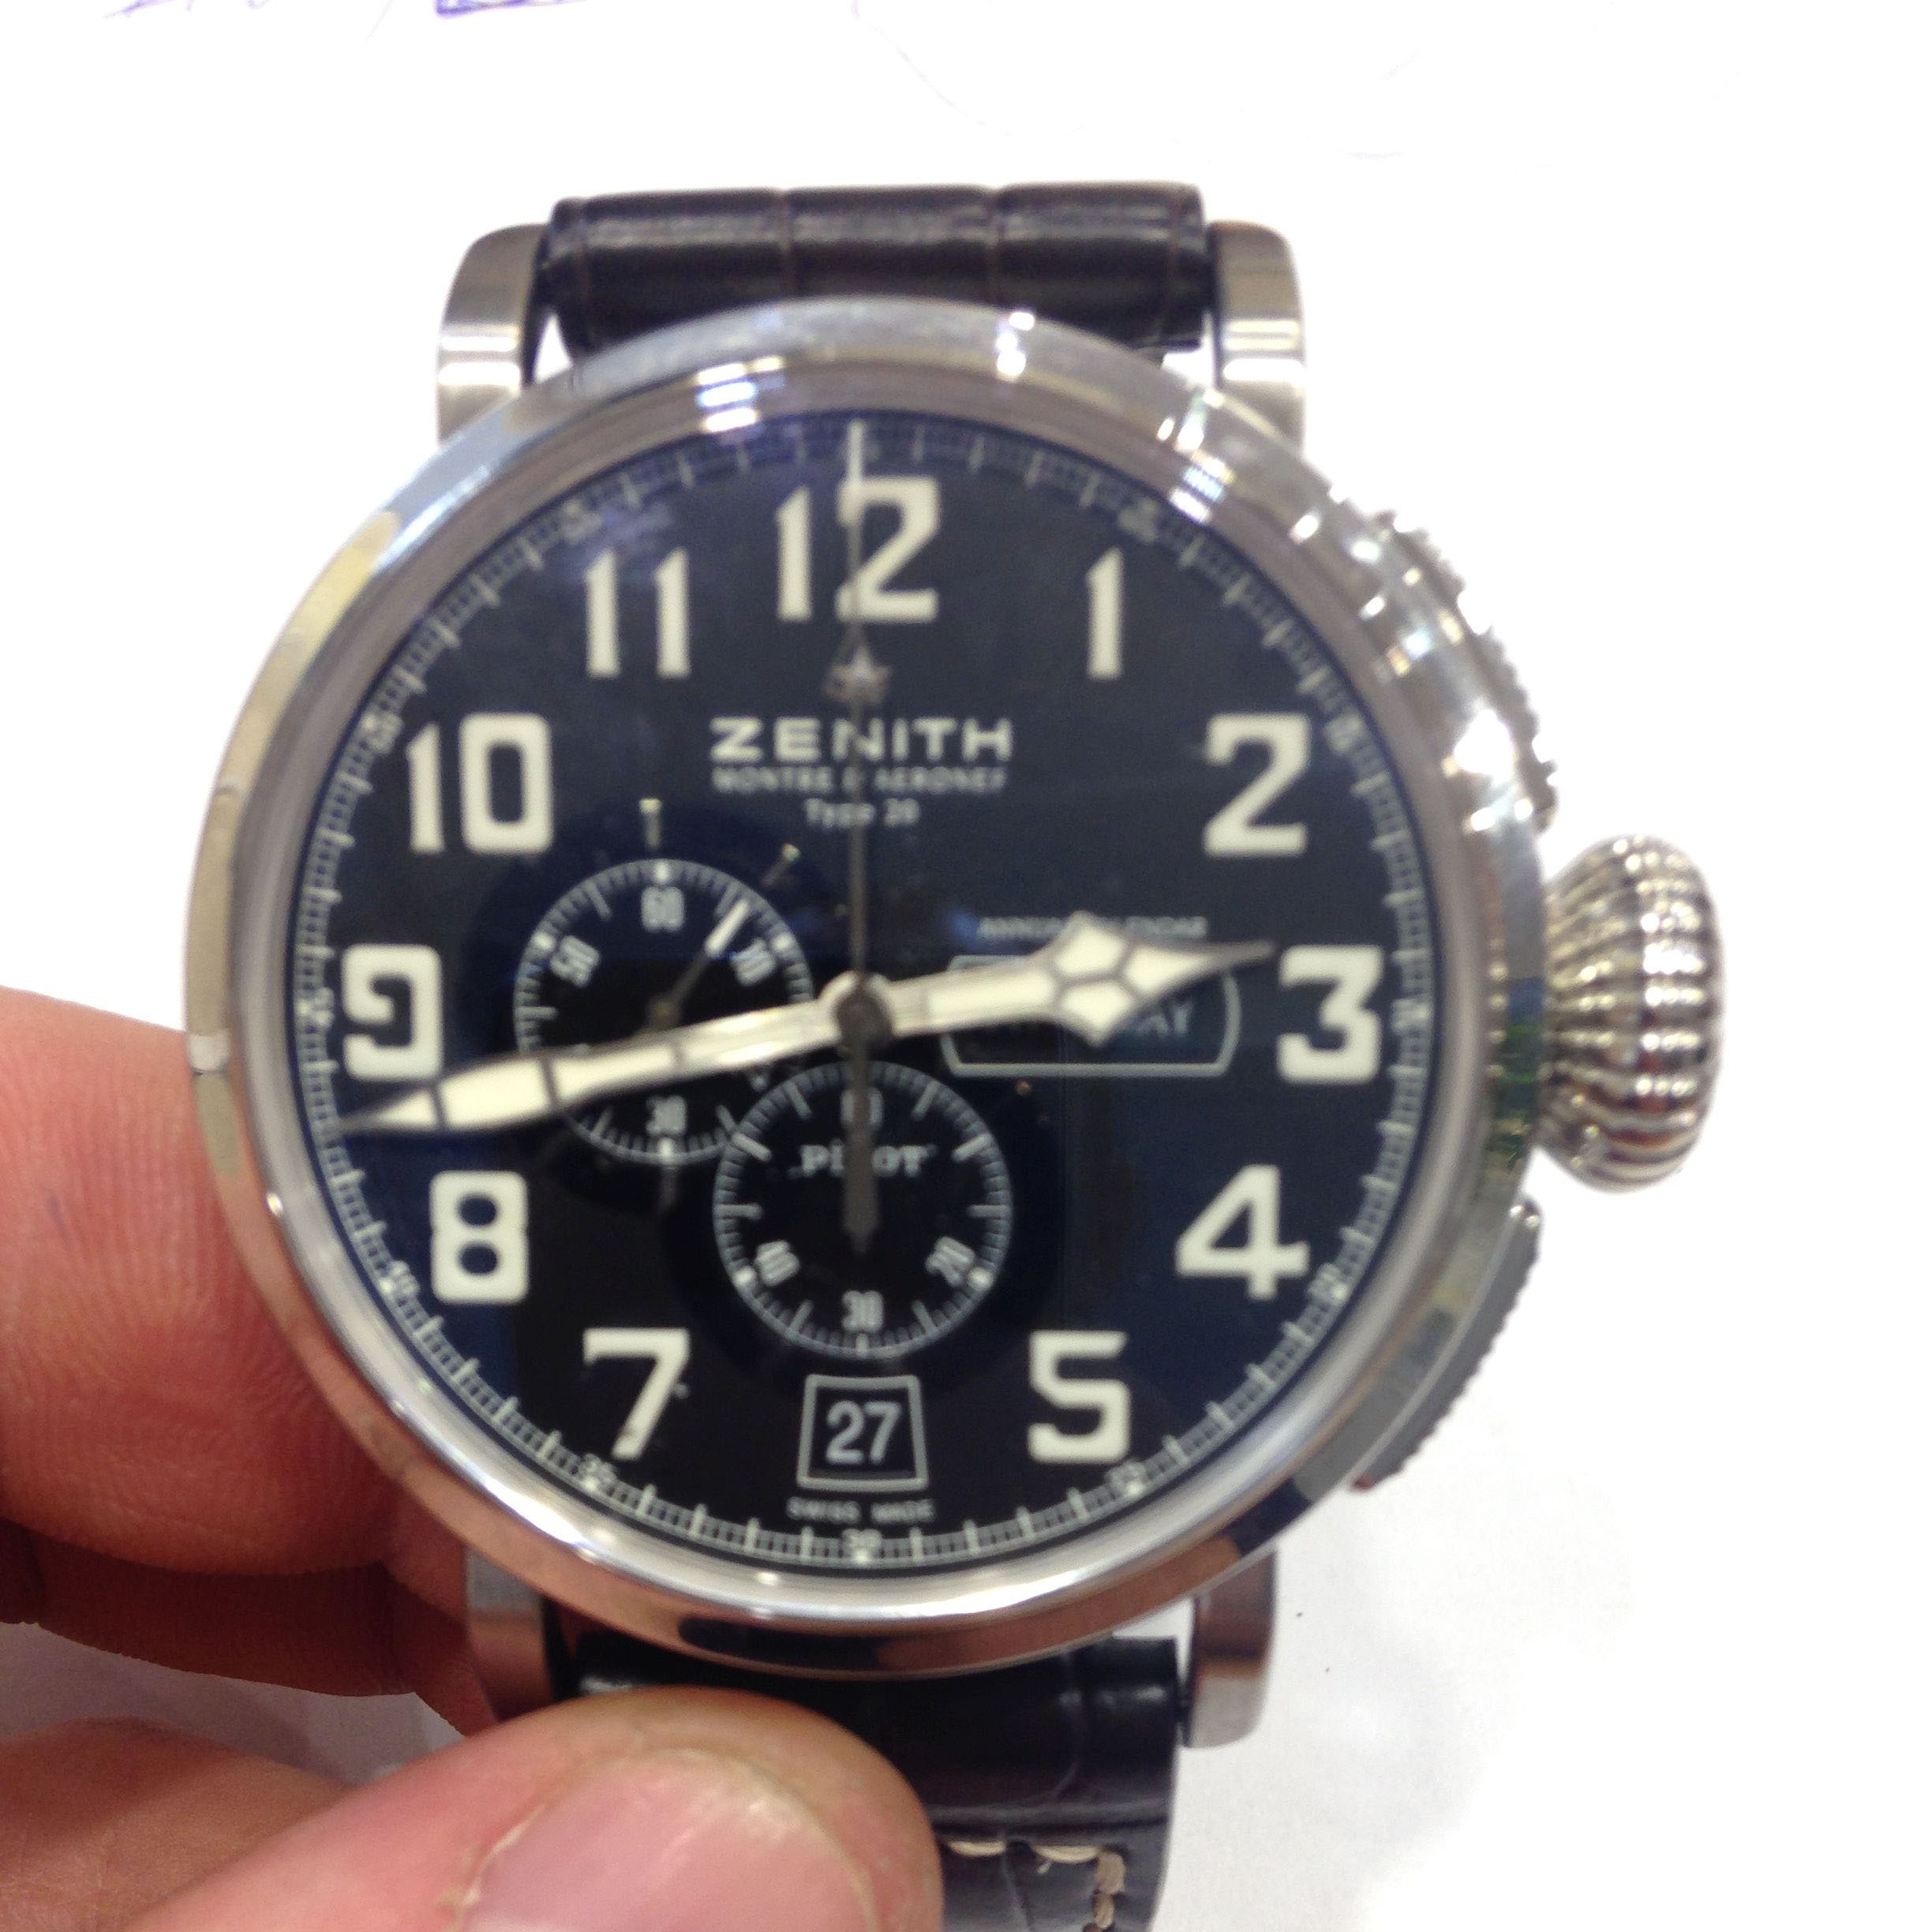 Швейцарские наручные часы марки Zenith